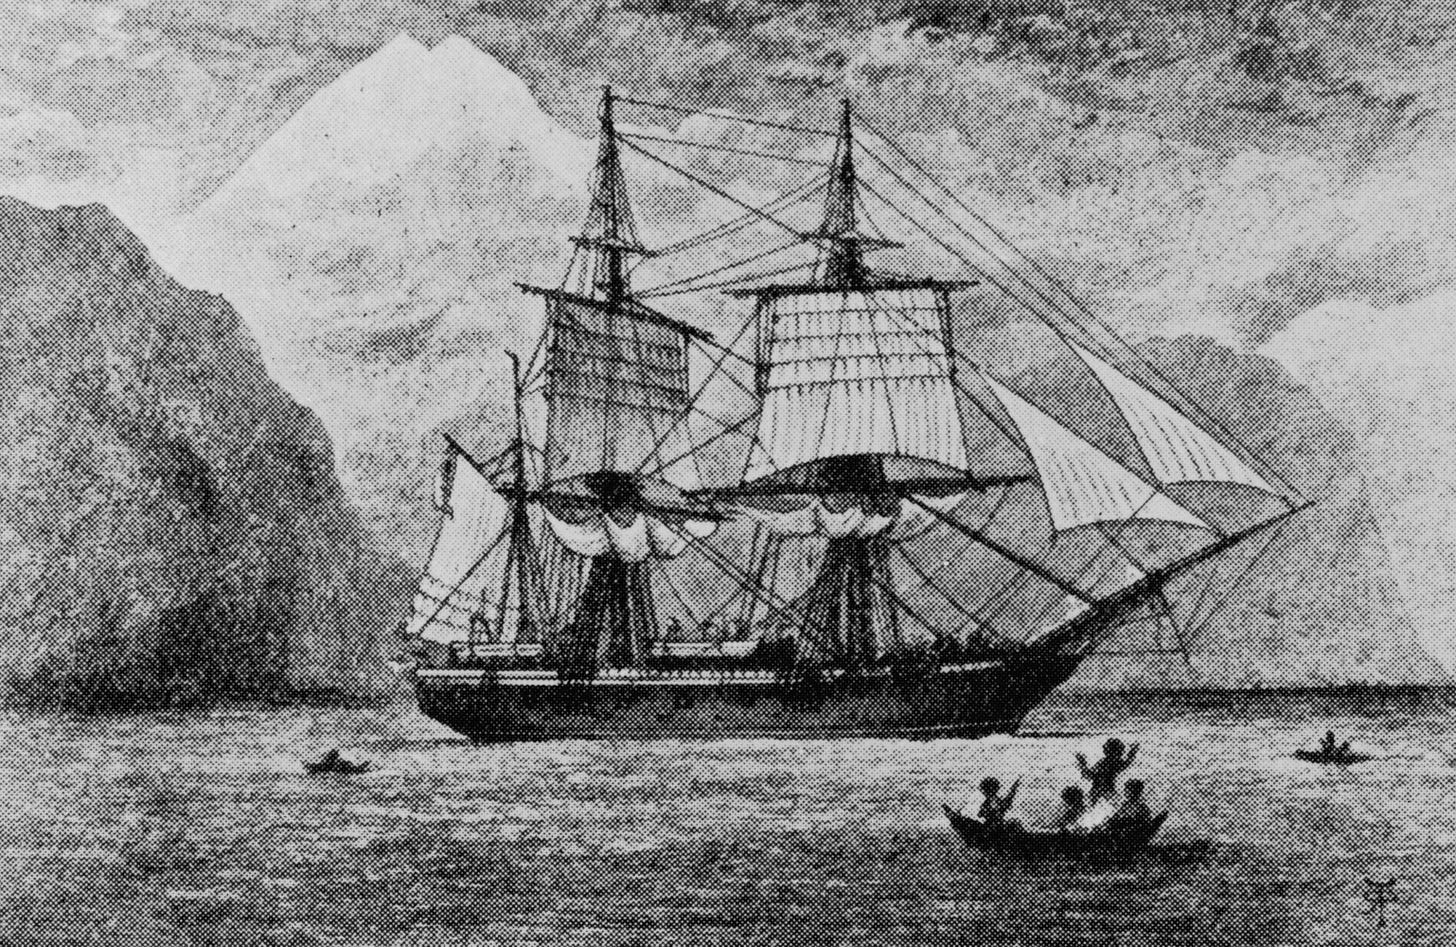 Voyage of Charles Darwin Aboard H.M.S. Beagle